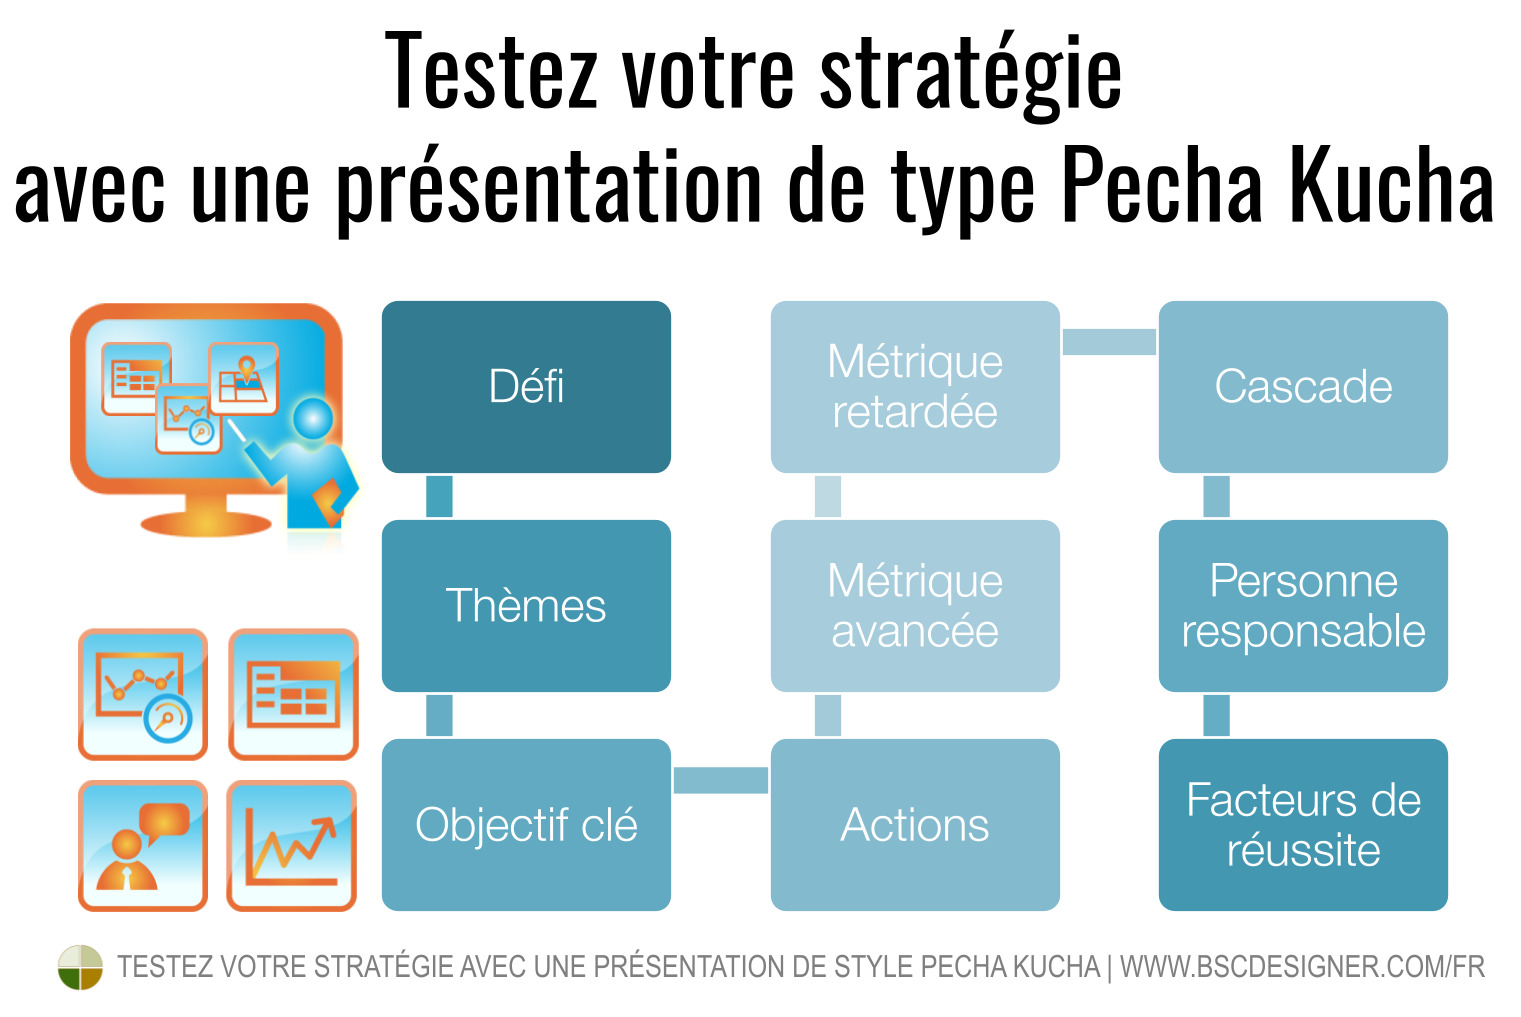 Crash-test your strategy with Pecha Kucha style presentation